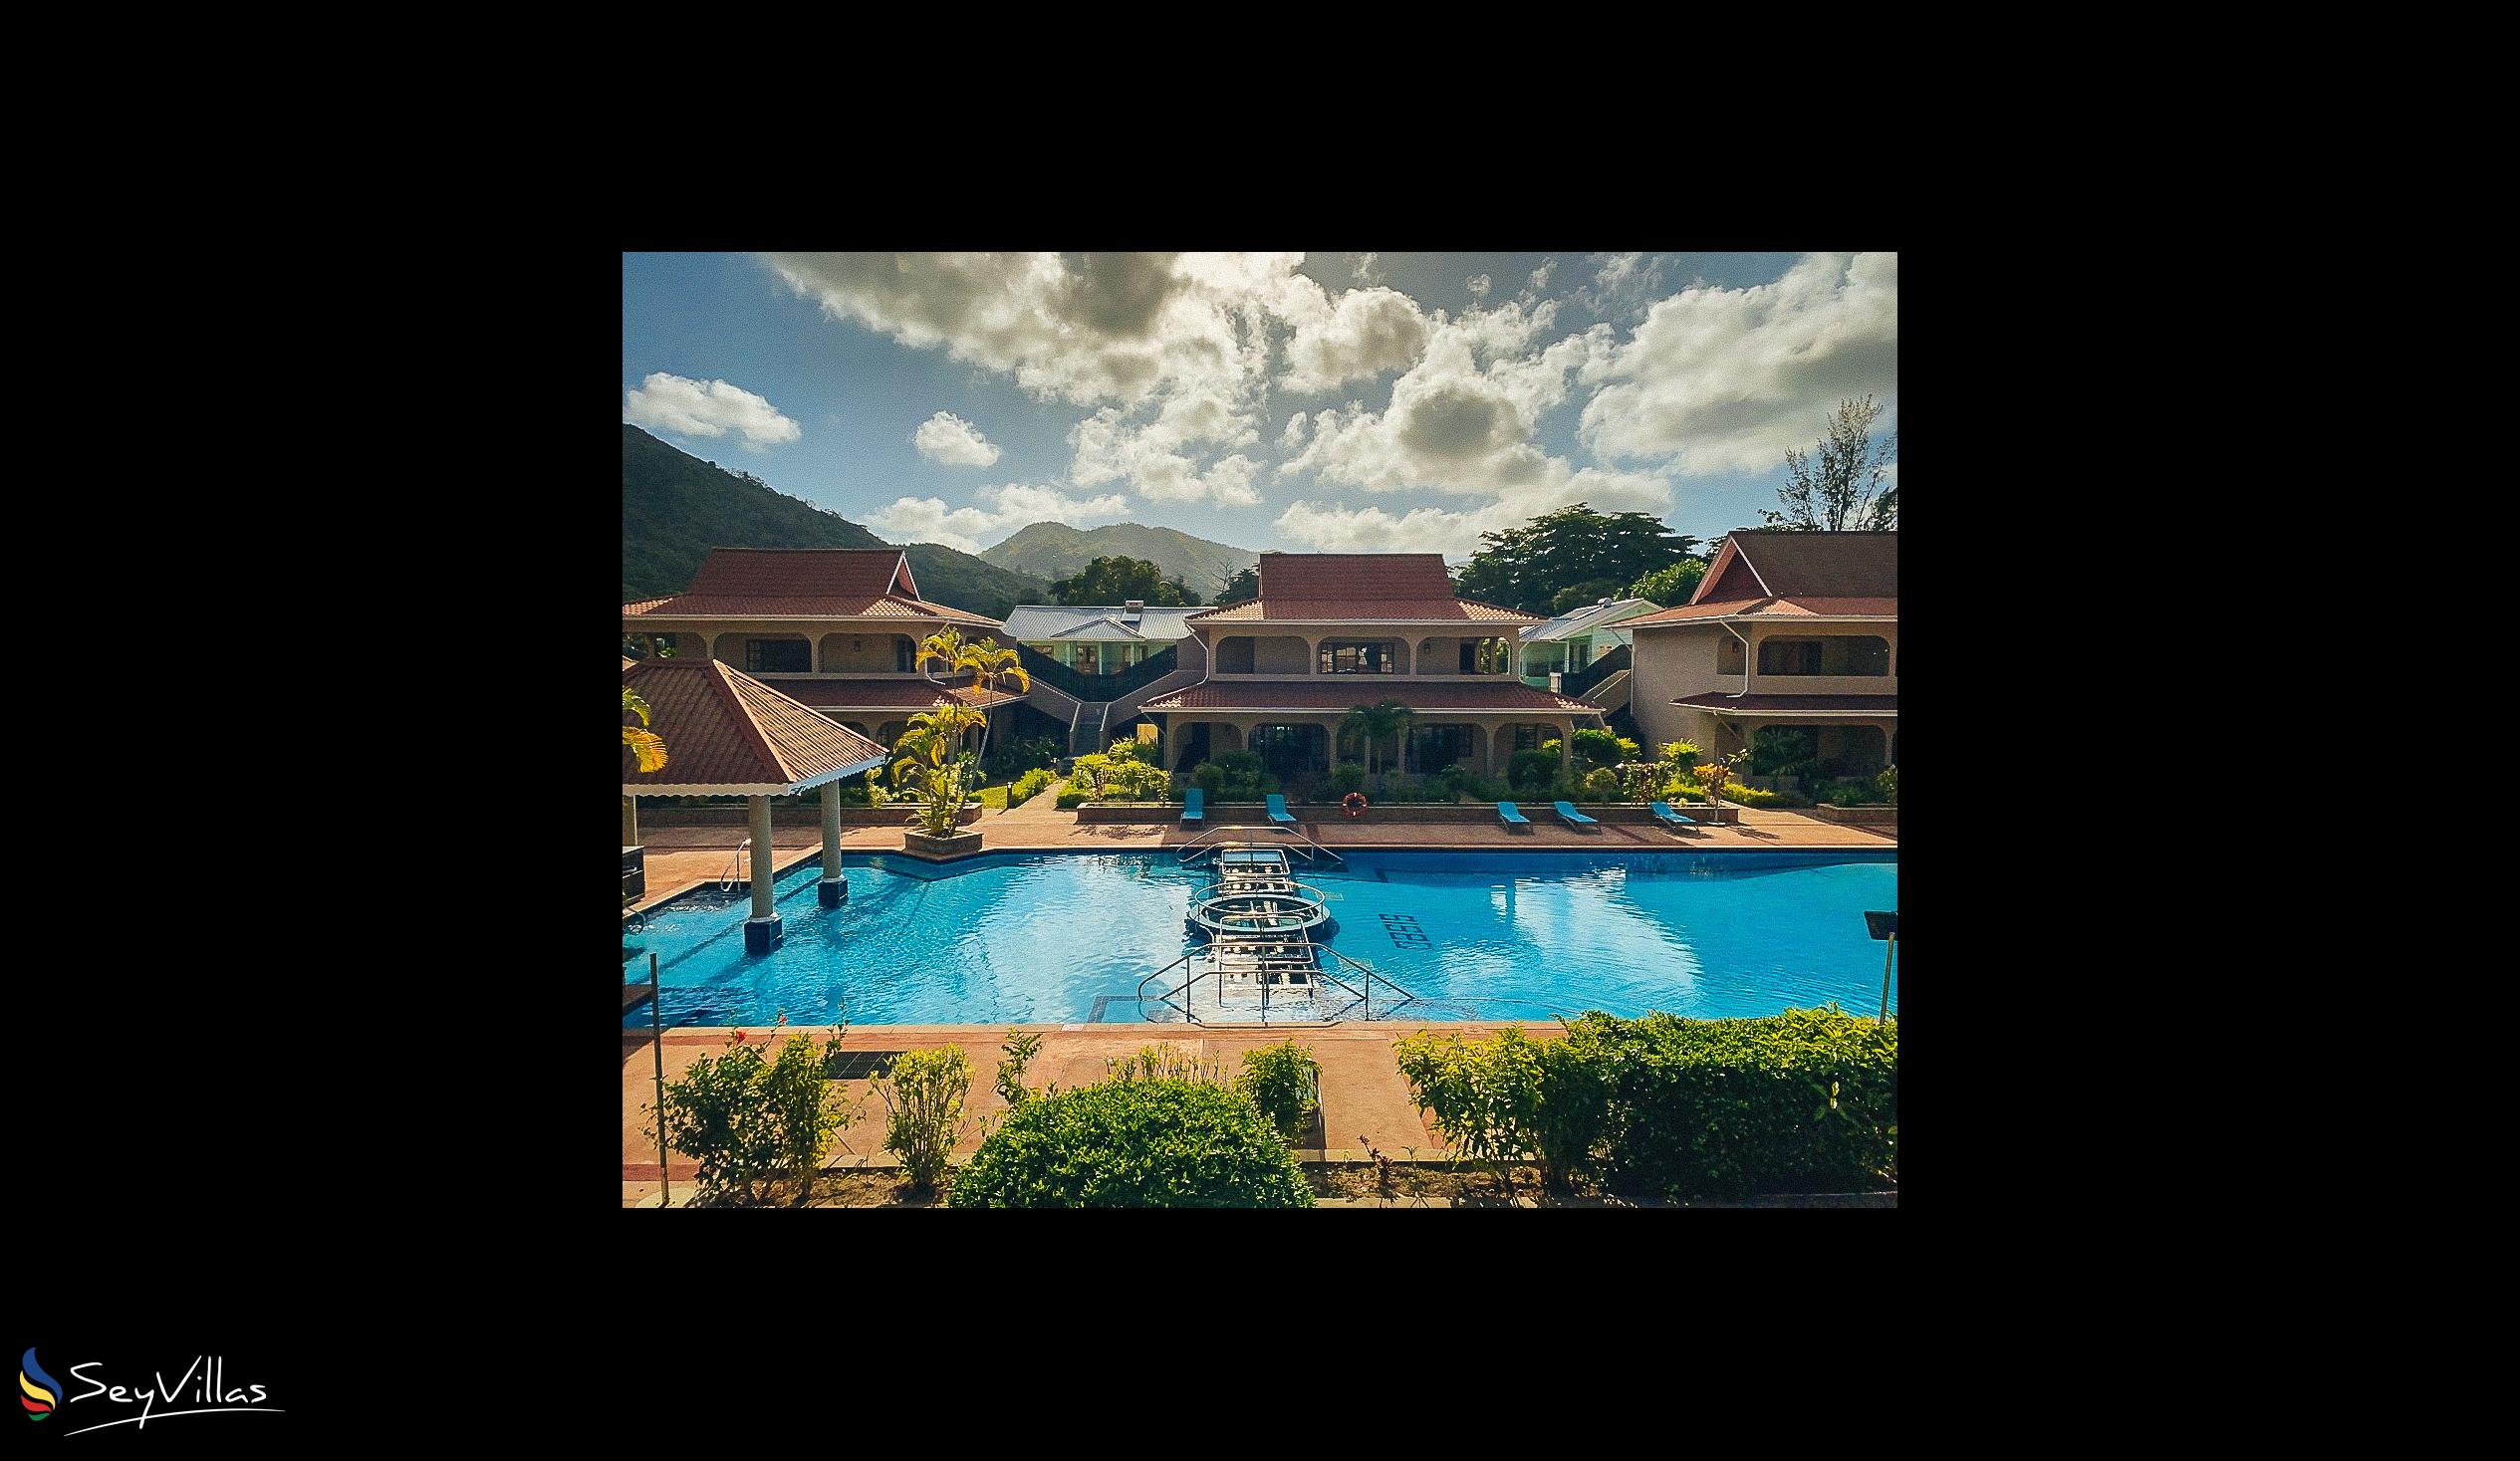 Photo 58: Oasis Hotel, Restaurant & Spa - Deluxe Room - Praslin (Seychelles)